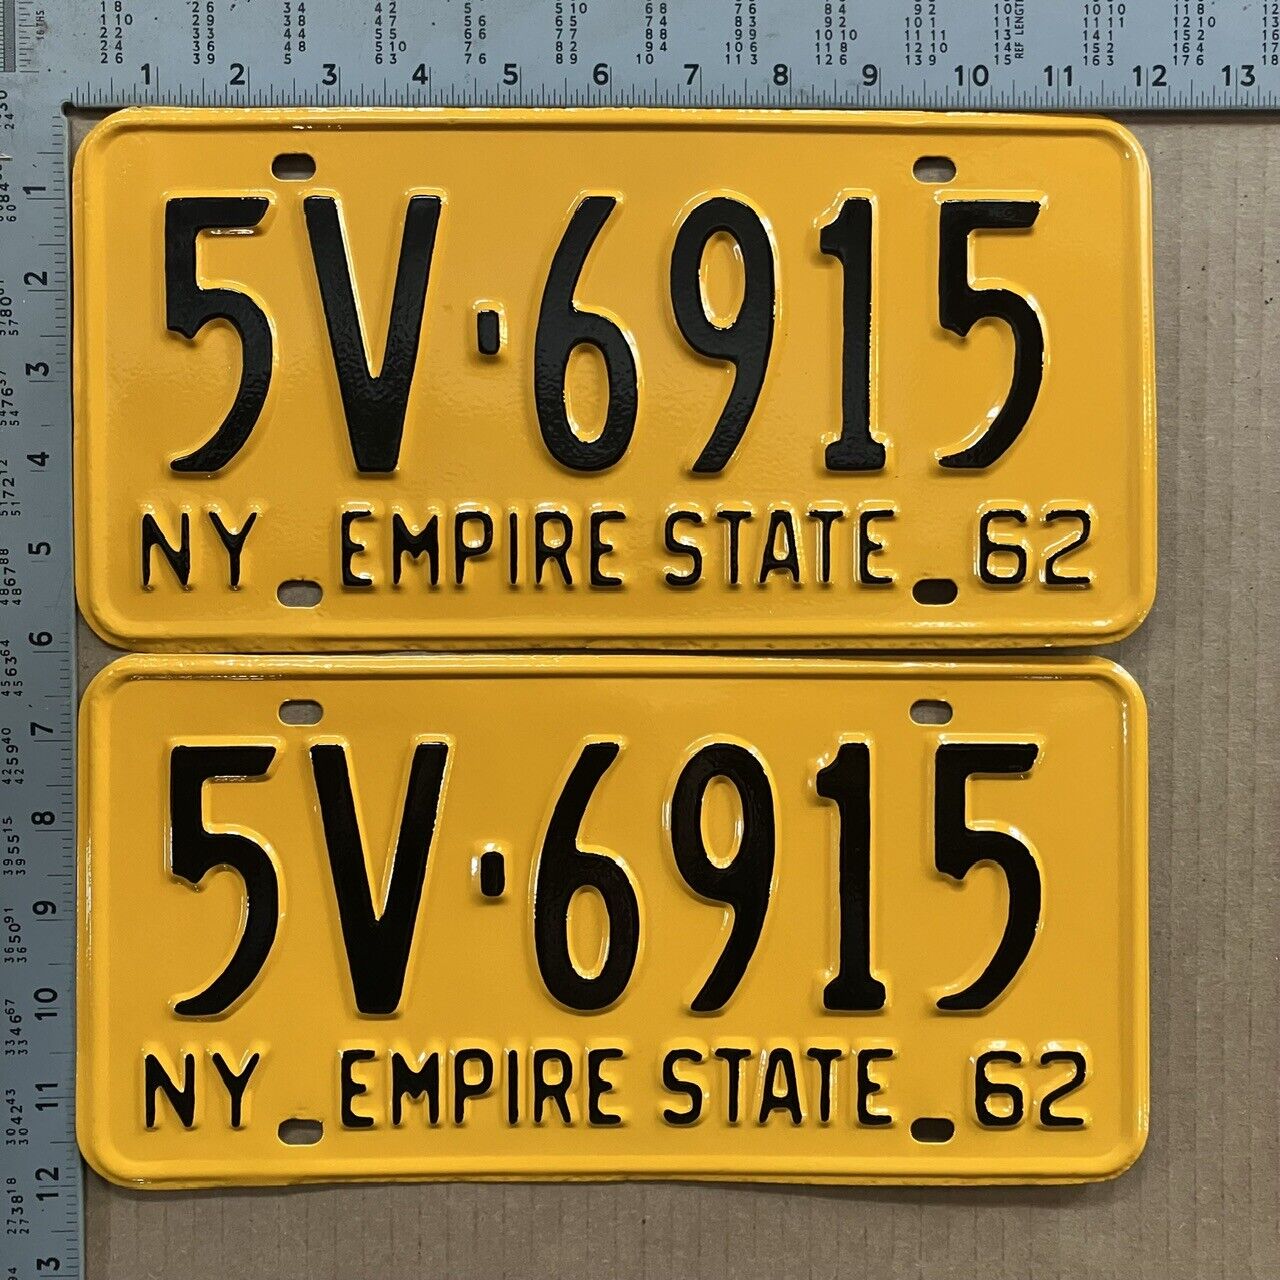 1962 1963 New York license plate pair 5V 6915 YOM DMV Westchester 13639